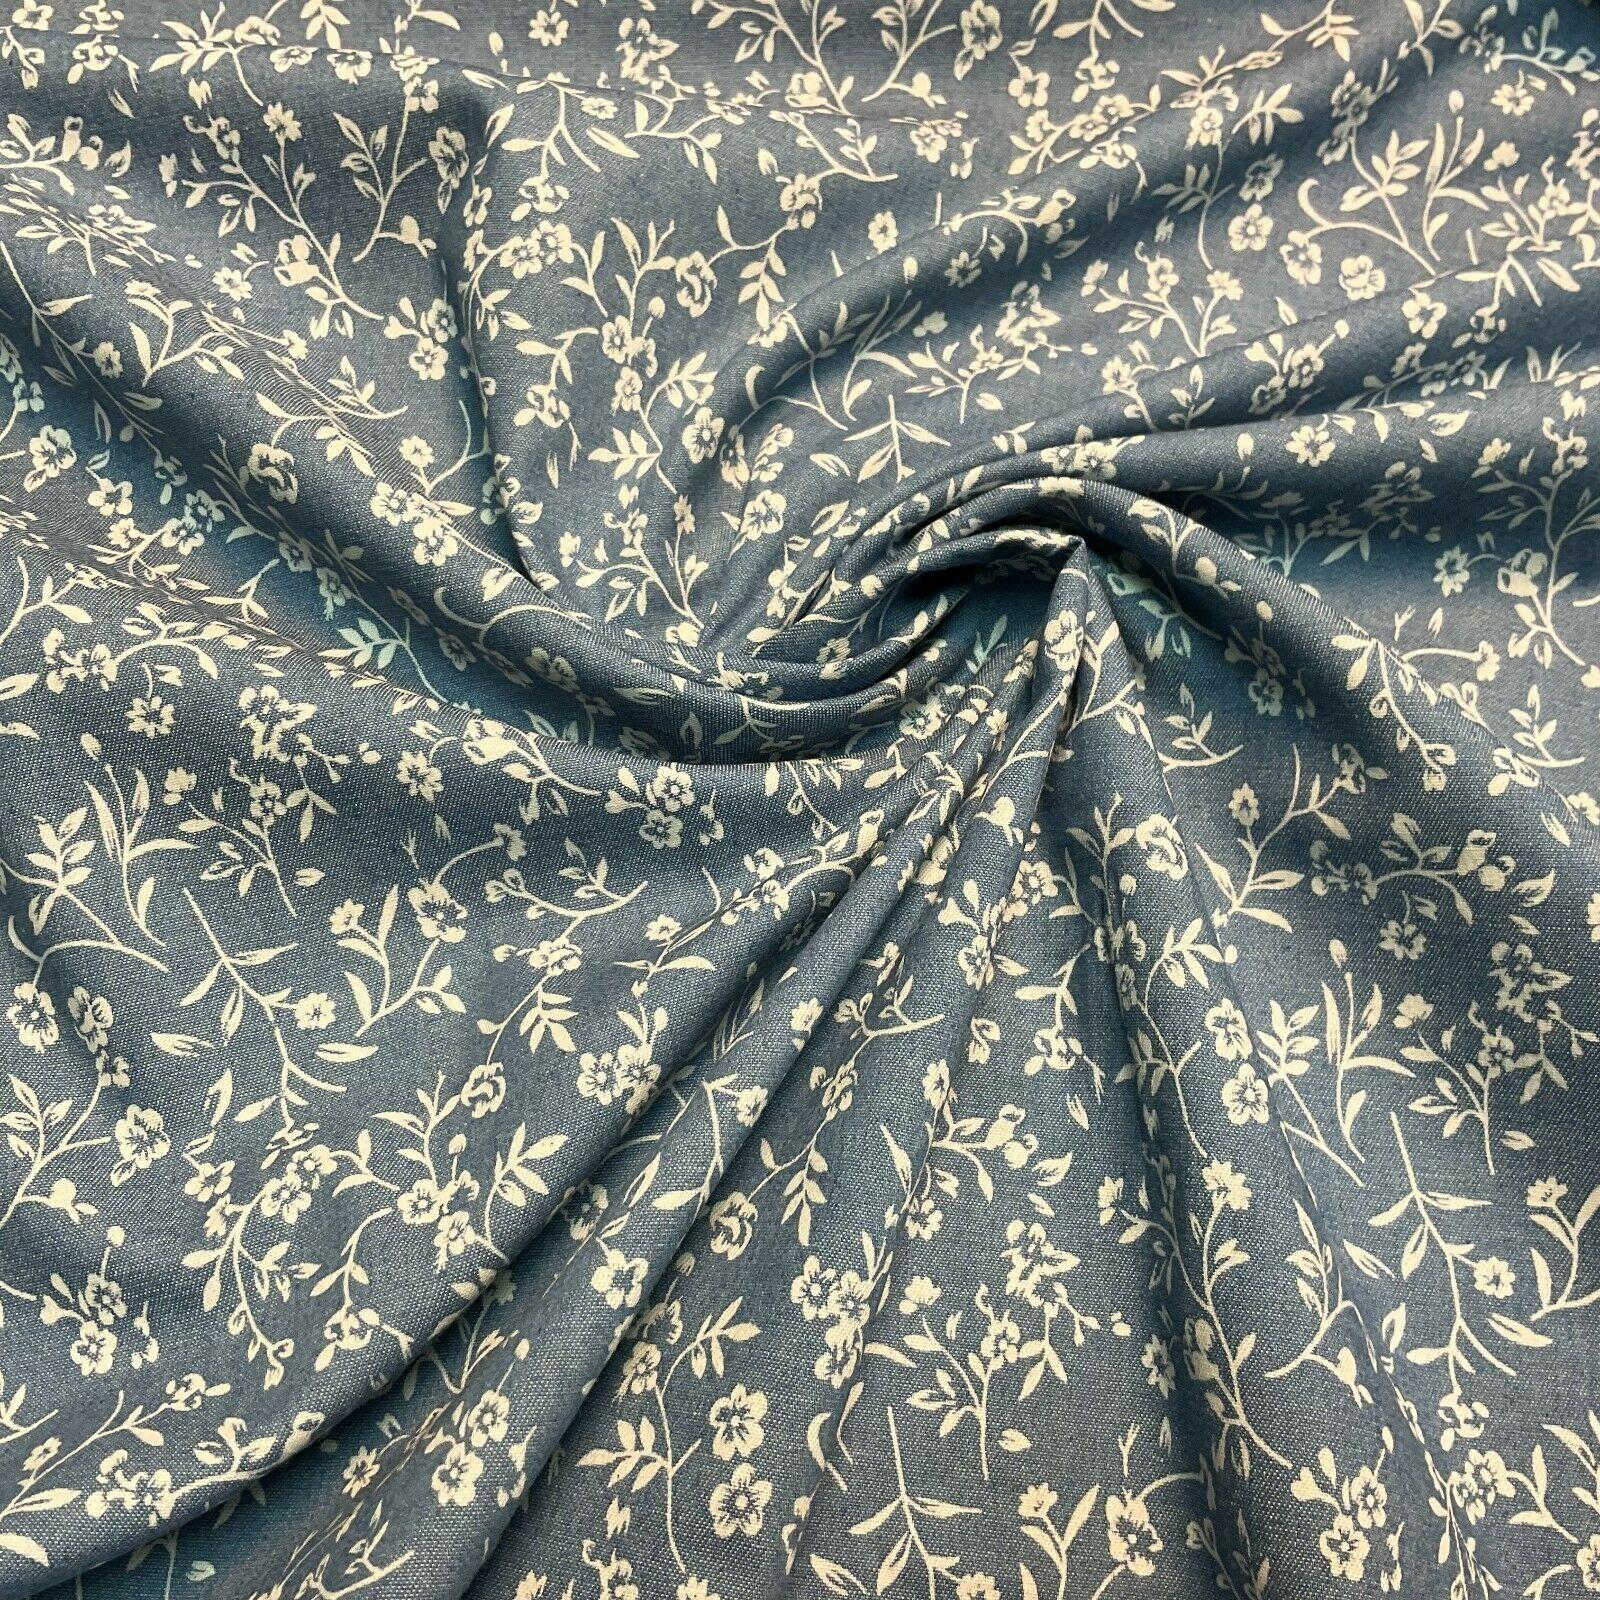 Printed 100% Cotton Chambray Denim Mixed Designs Dress Fabric 147cm M1604